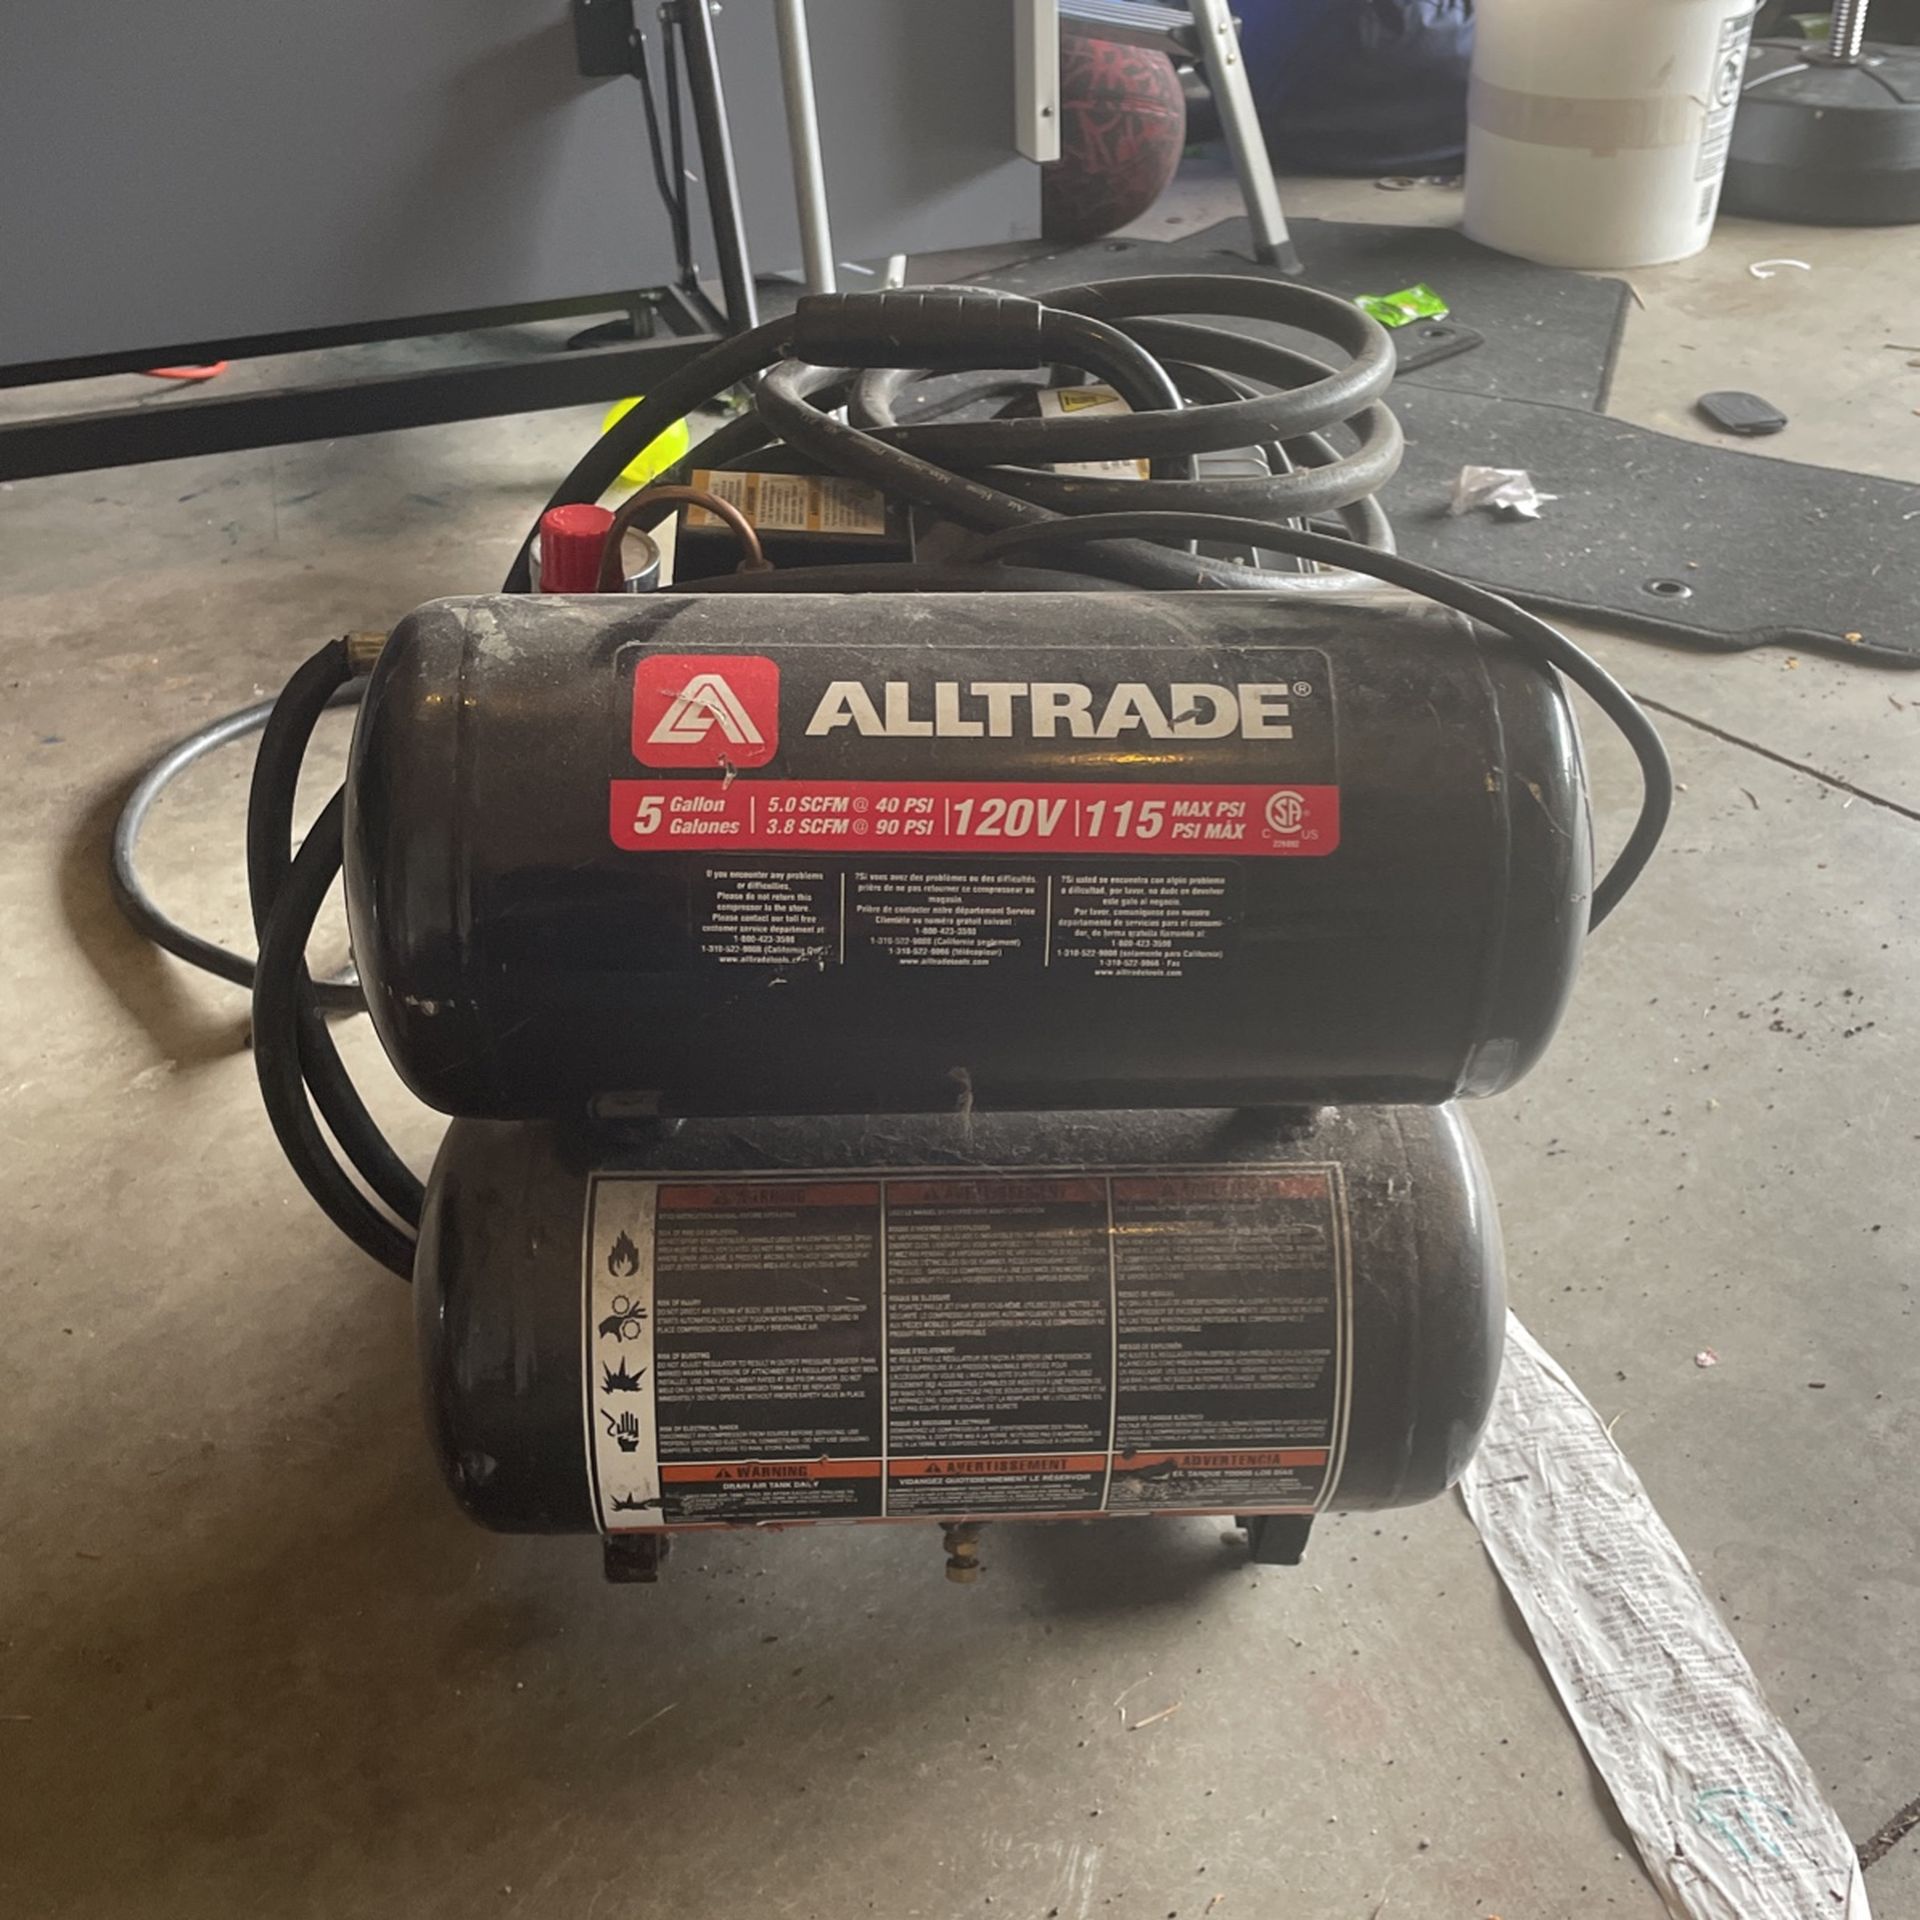 Alltrade 5 Gallon Air compressor 